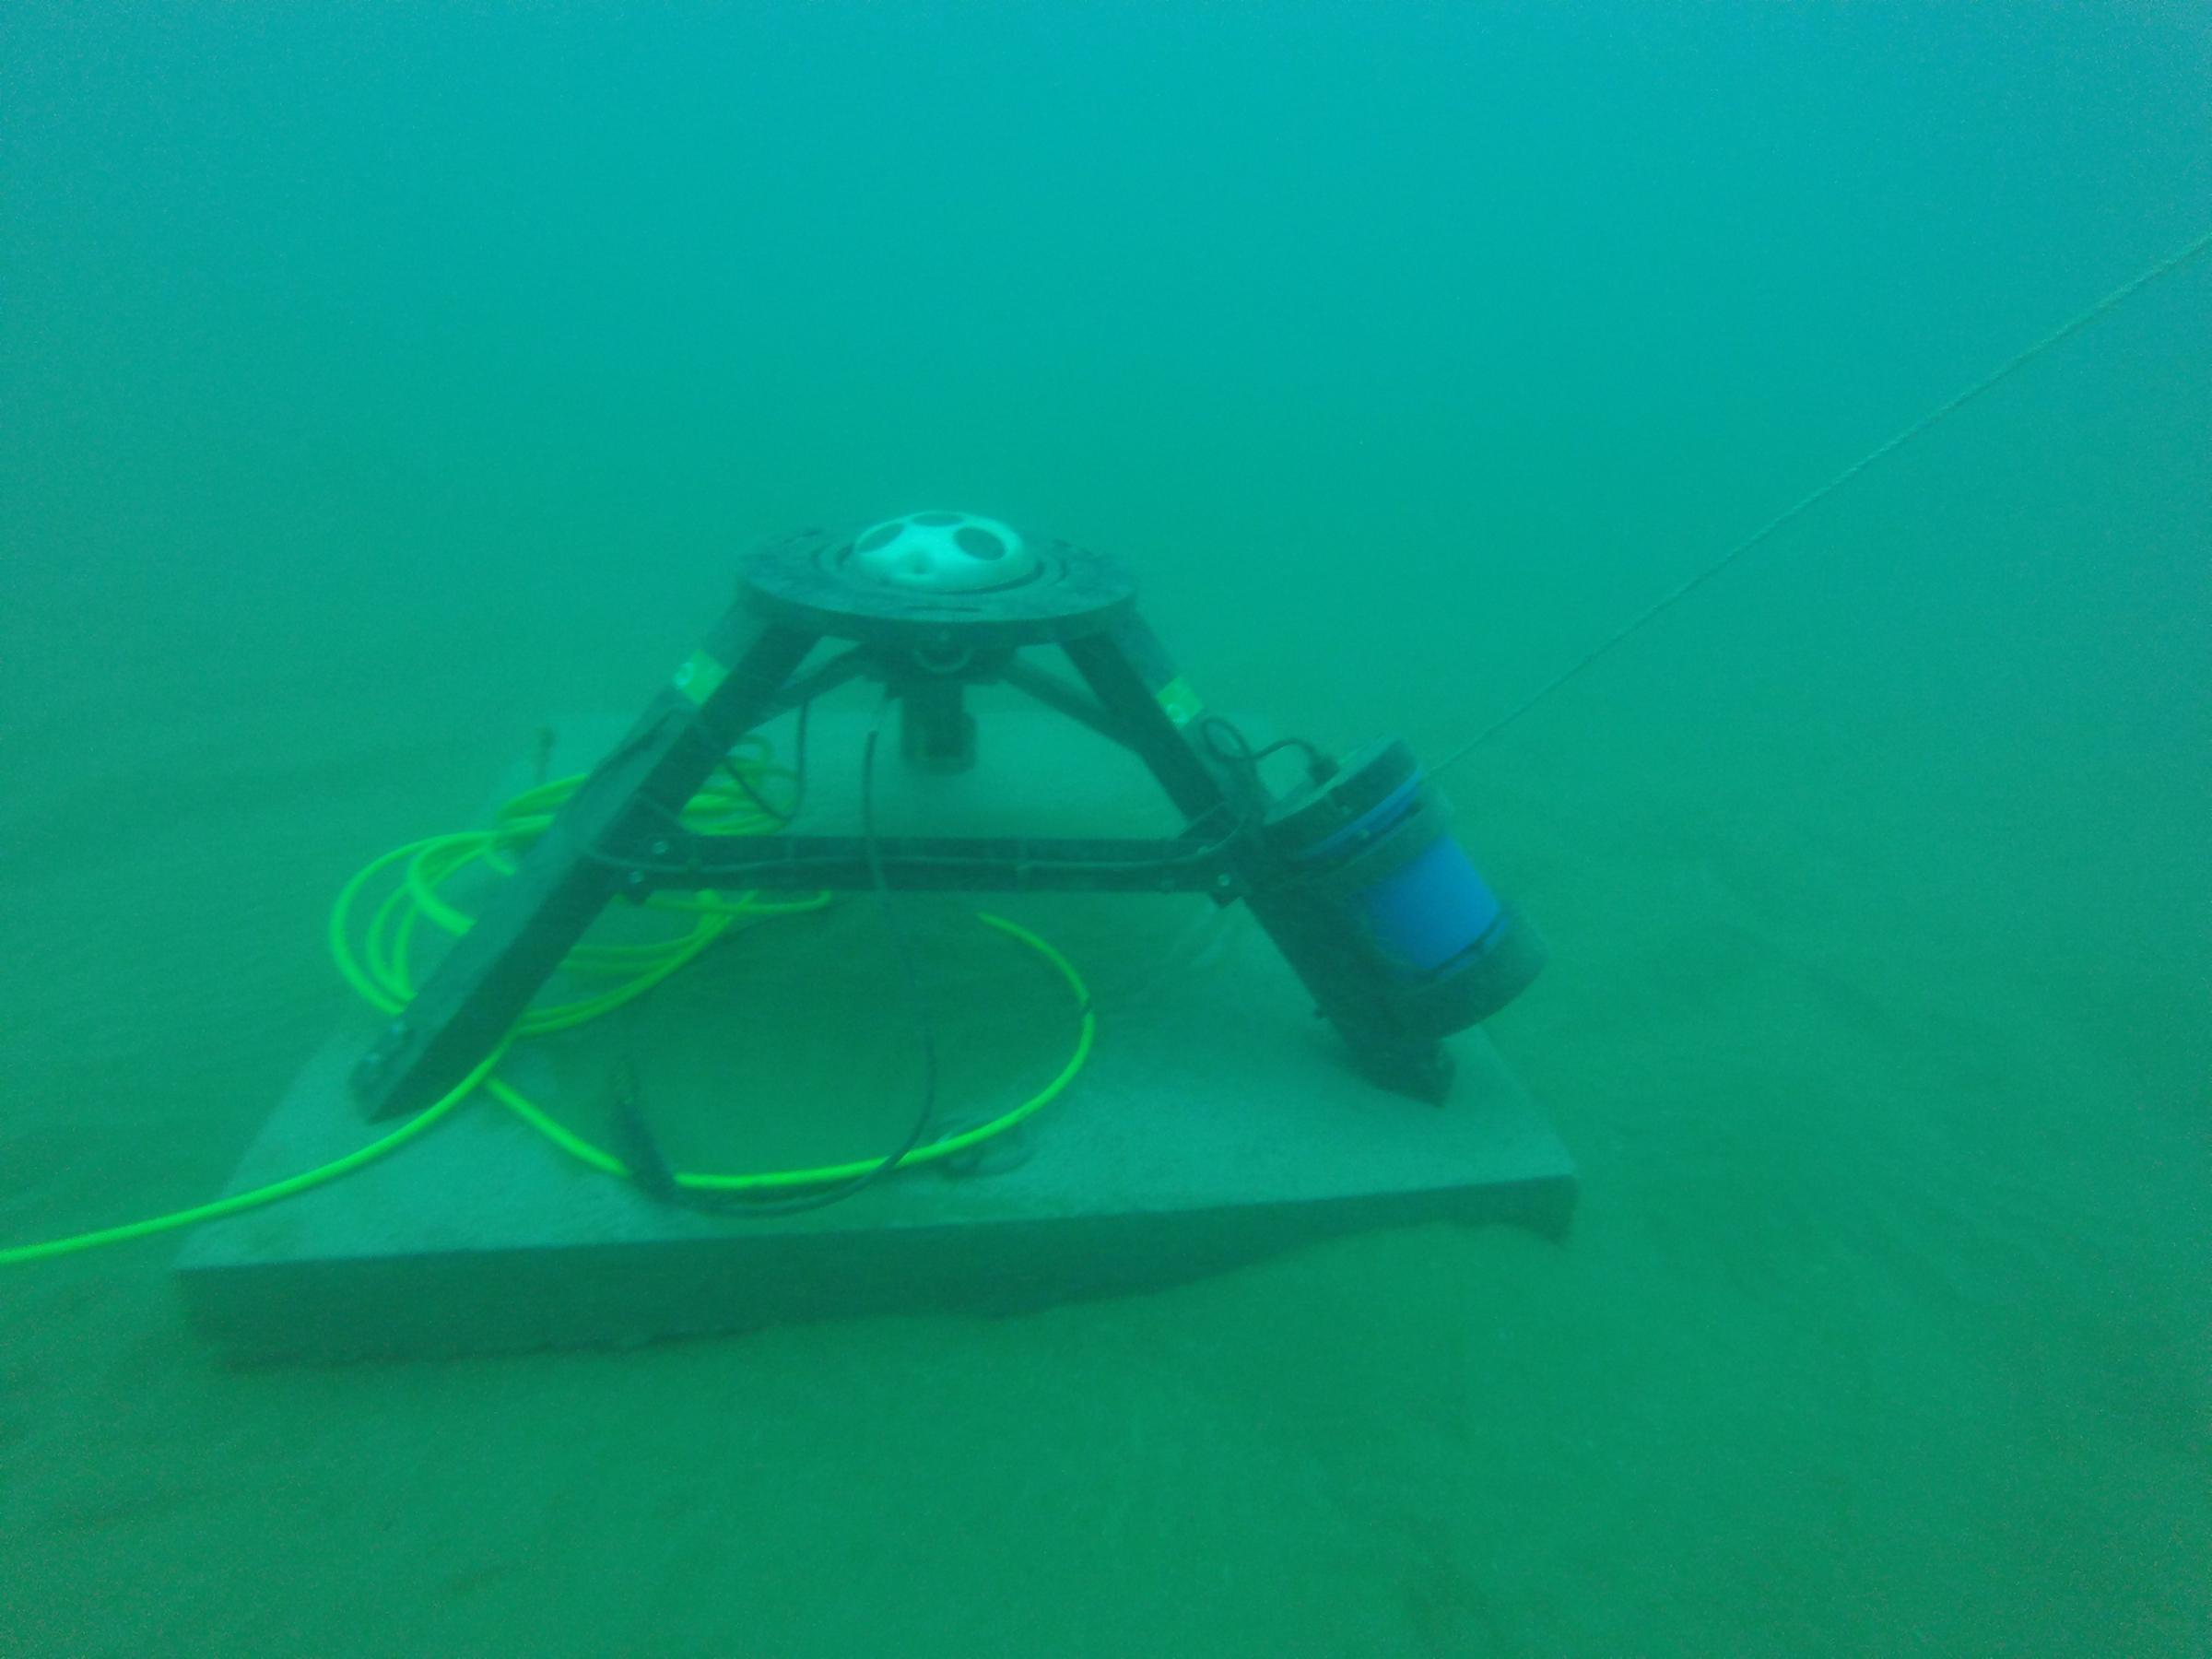 Nortek instrument mounted under water